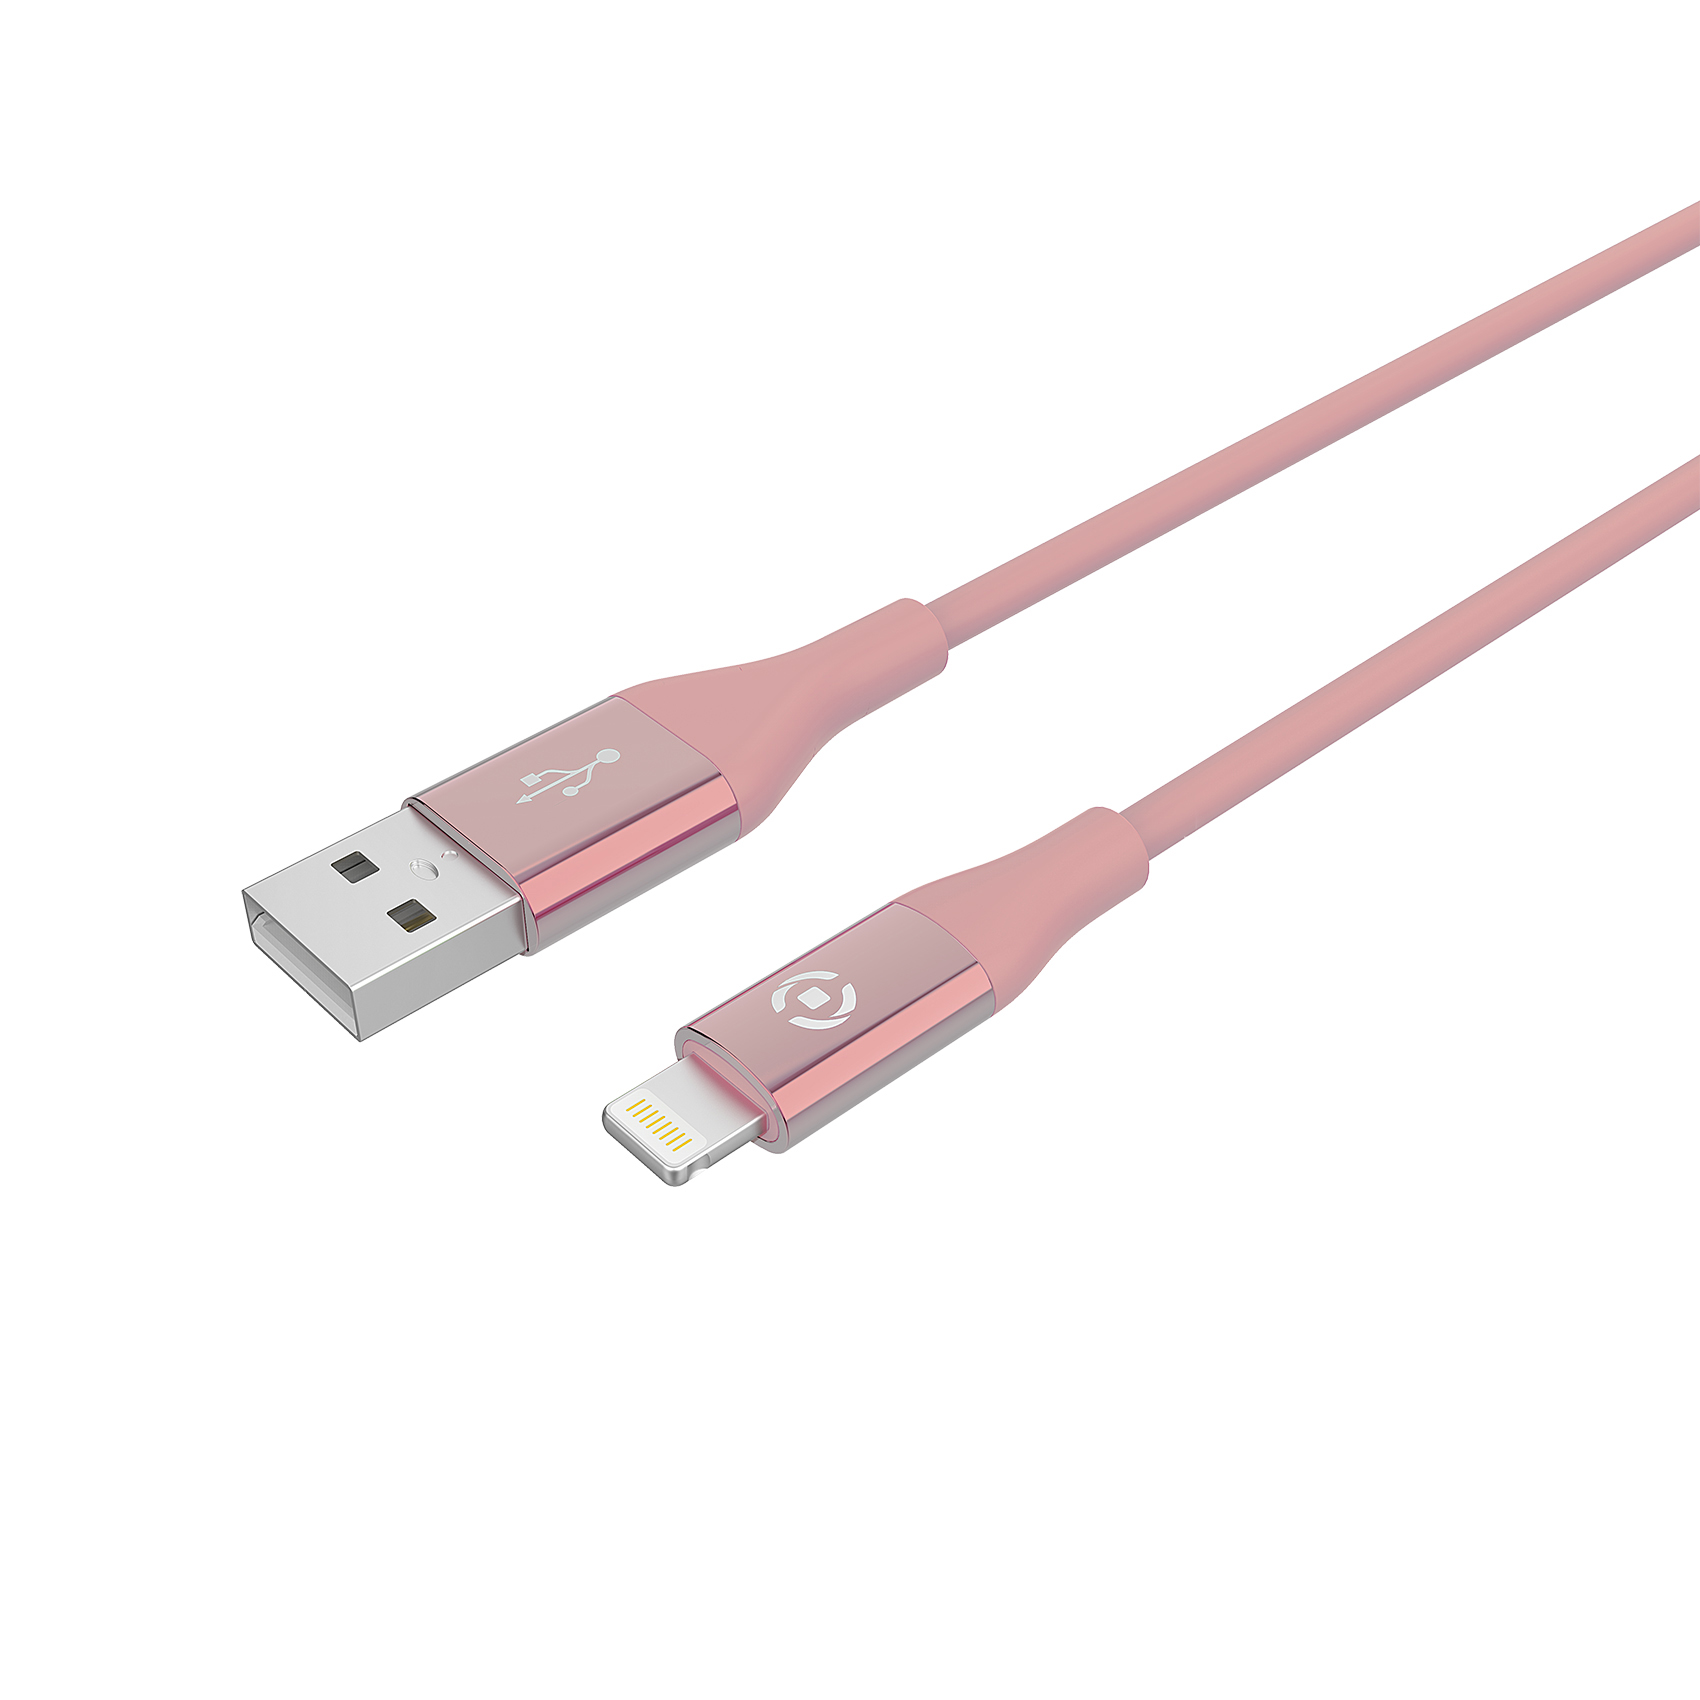 CELLY USB - LIGHTNING kabl za iPhone u PINK boji slika 1